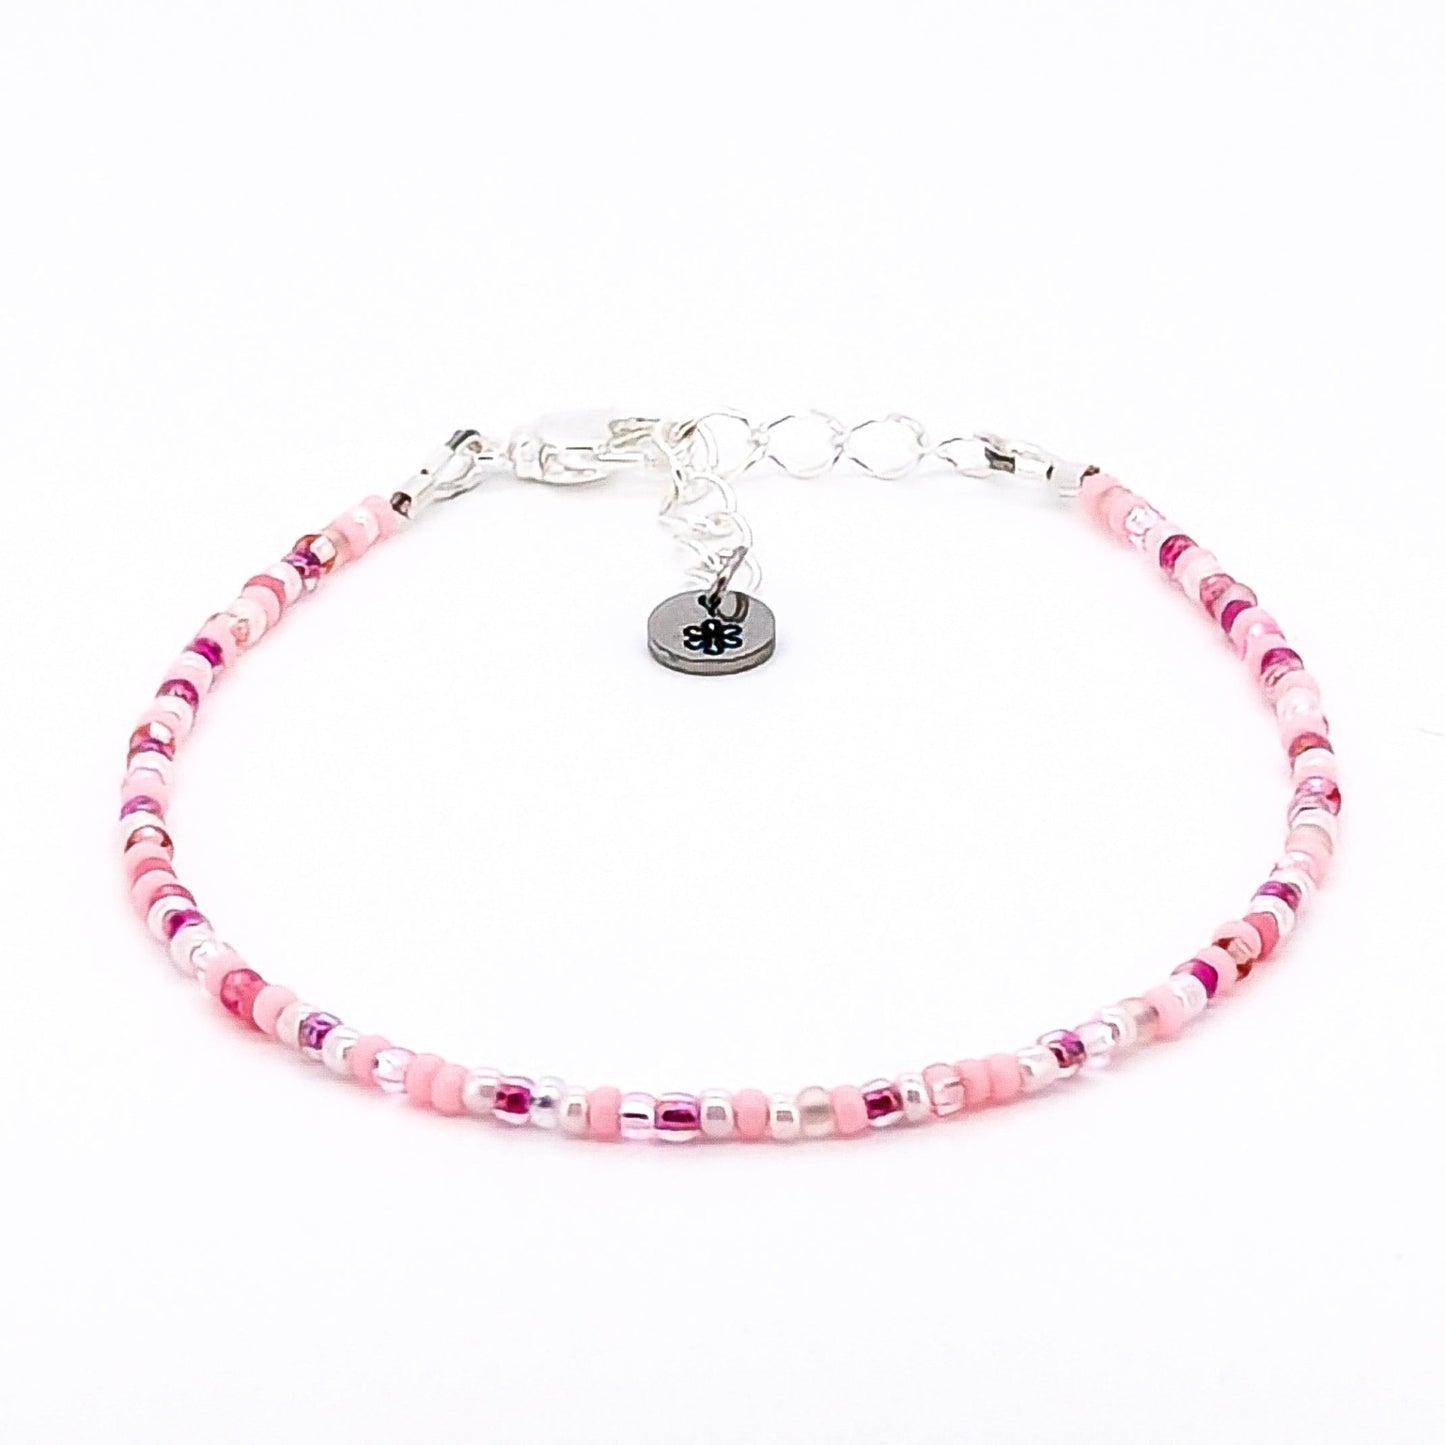 Dainty bracelet - Pale Pink seed bead bracelet - creations by cherie